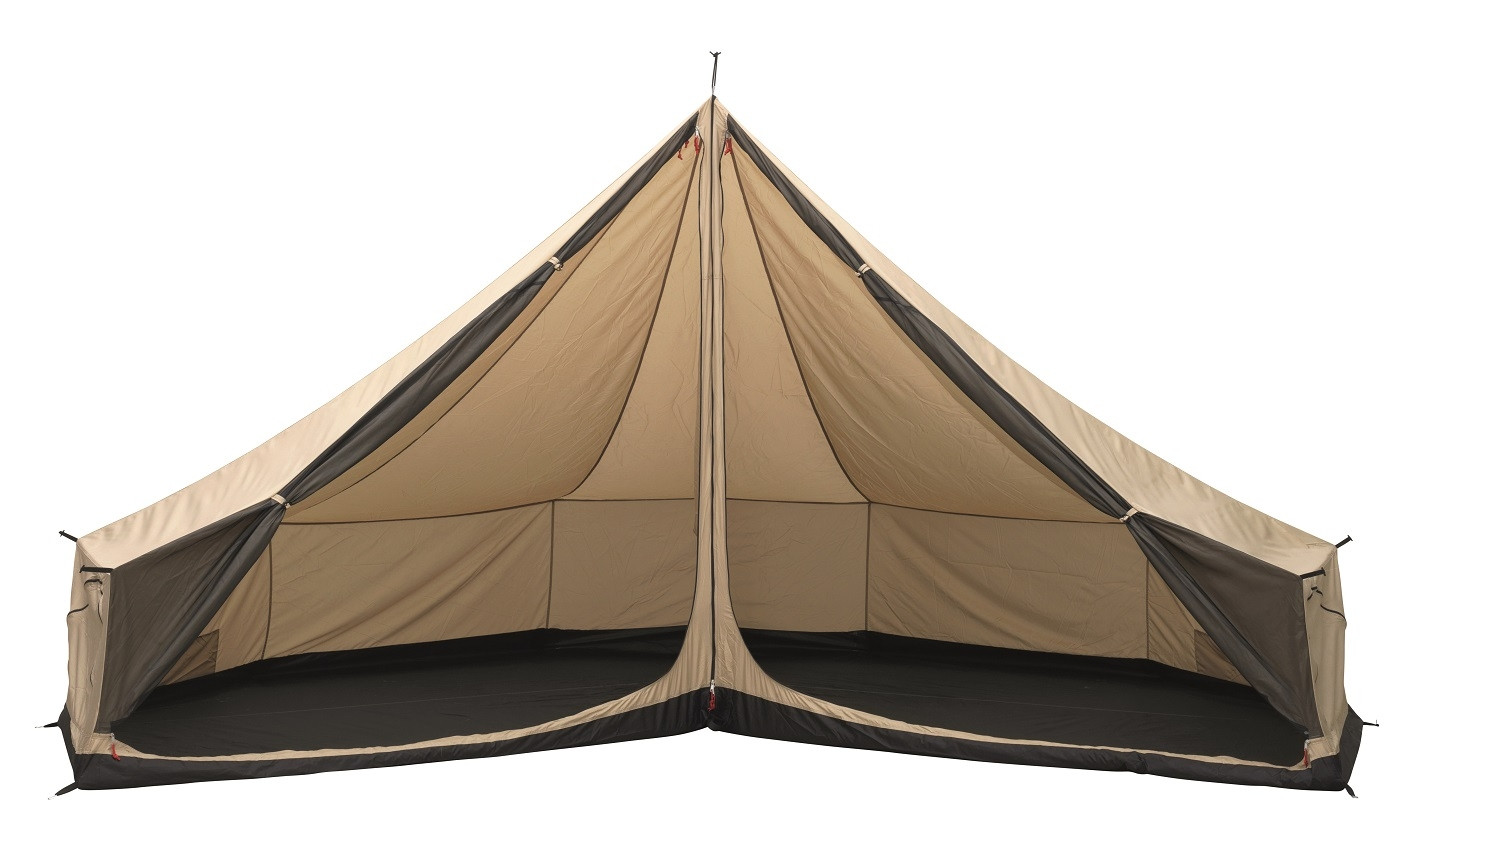 2 Bedrooms ROBENS INNER TENT FOR KIOWA 10 Person Tent Liner 